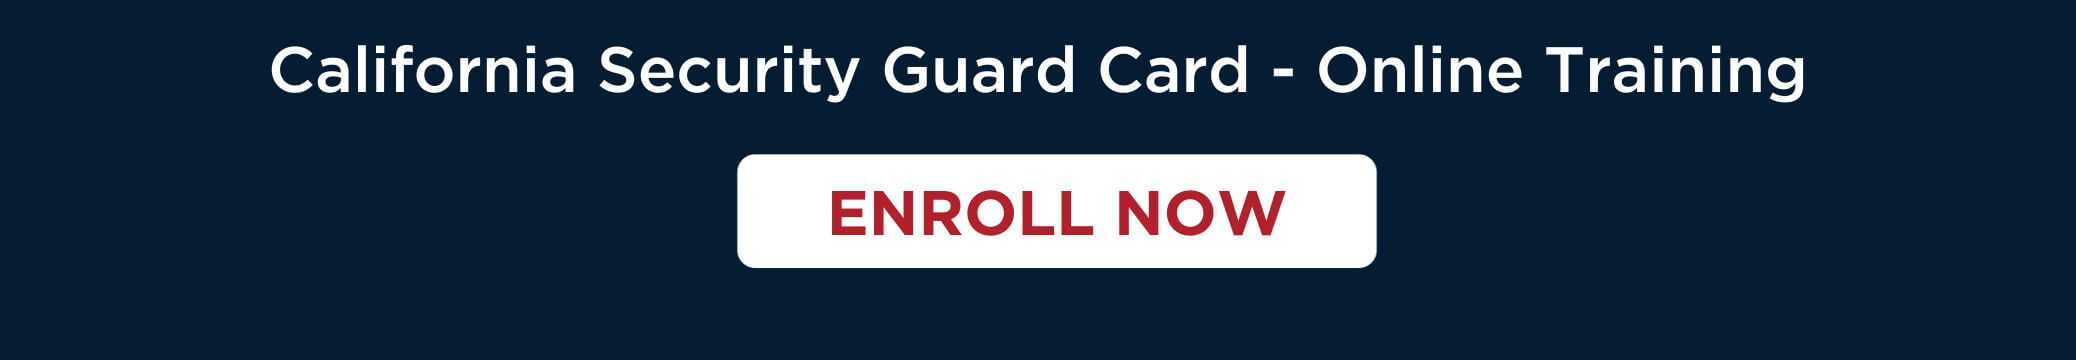 CA Security Guard Training - enroll